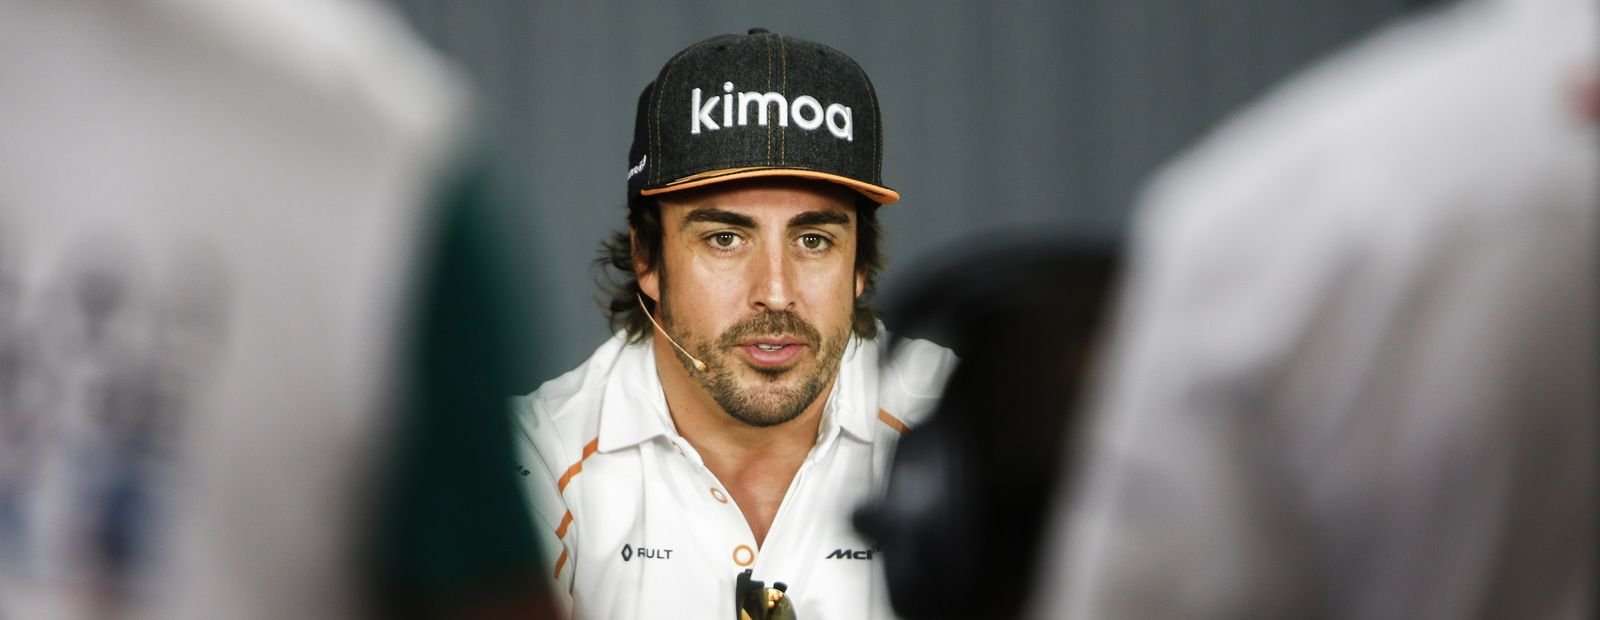 image for McLaren confirms Fernando Alonso decision